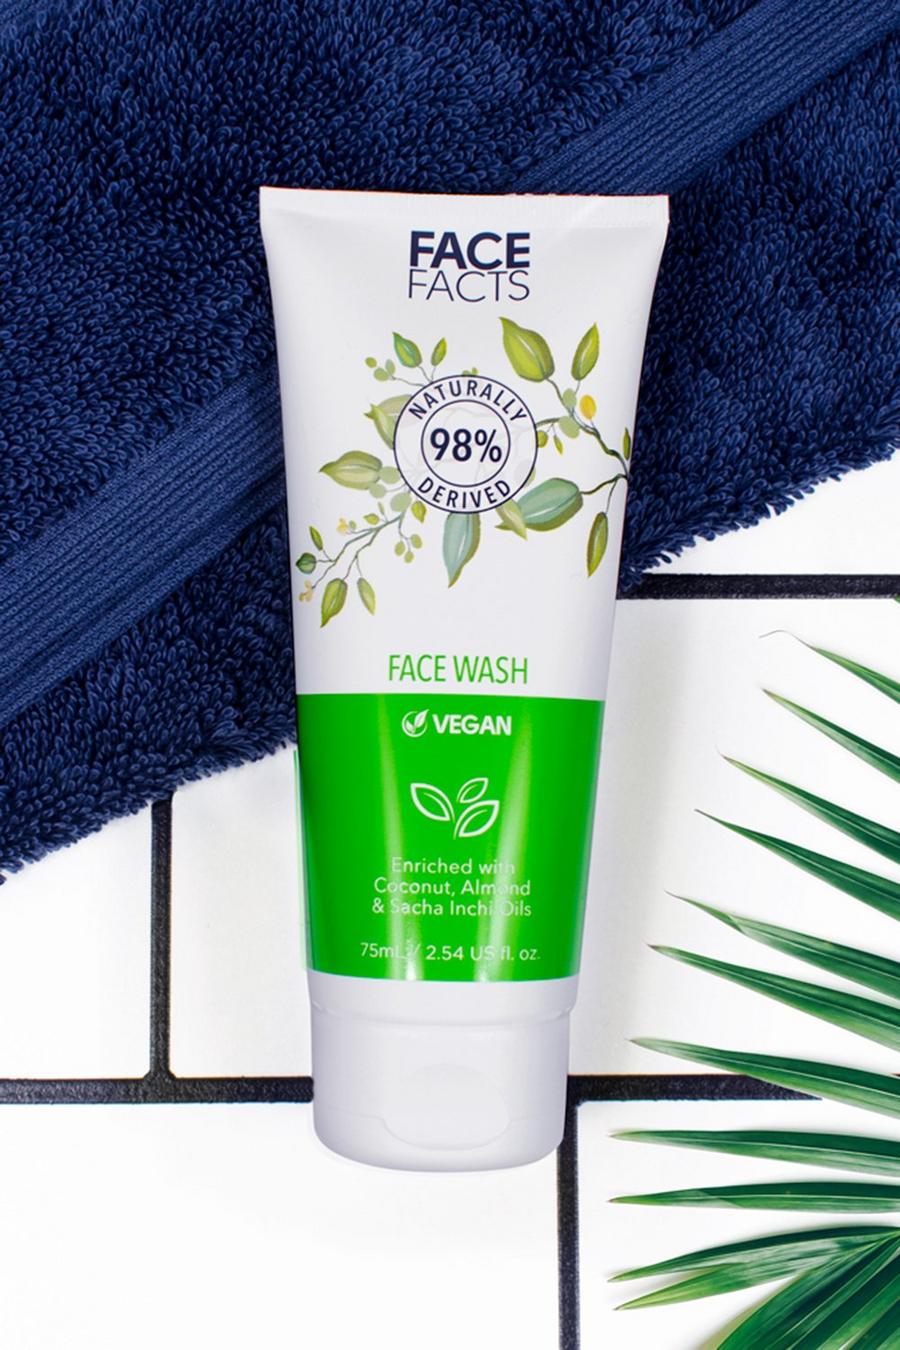 Green Face Facts 98% Natural Face Wash